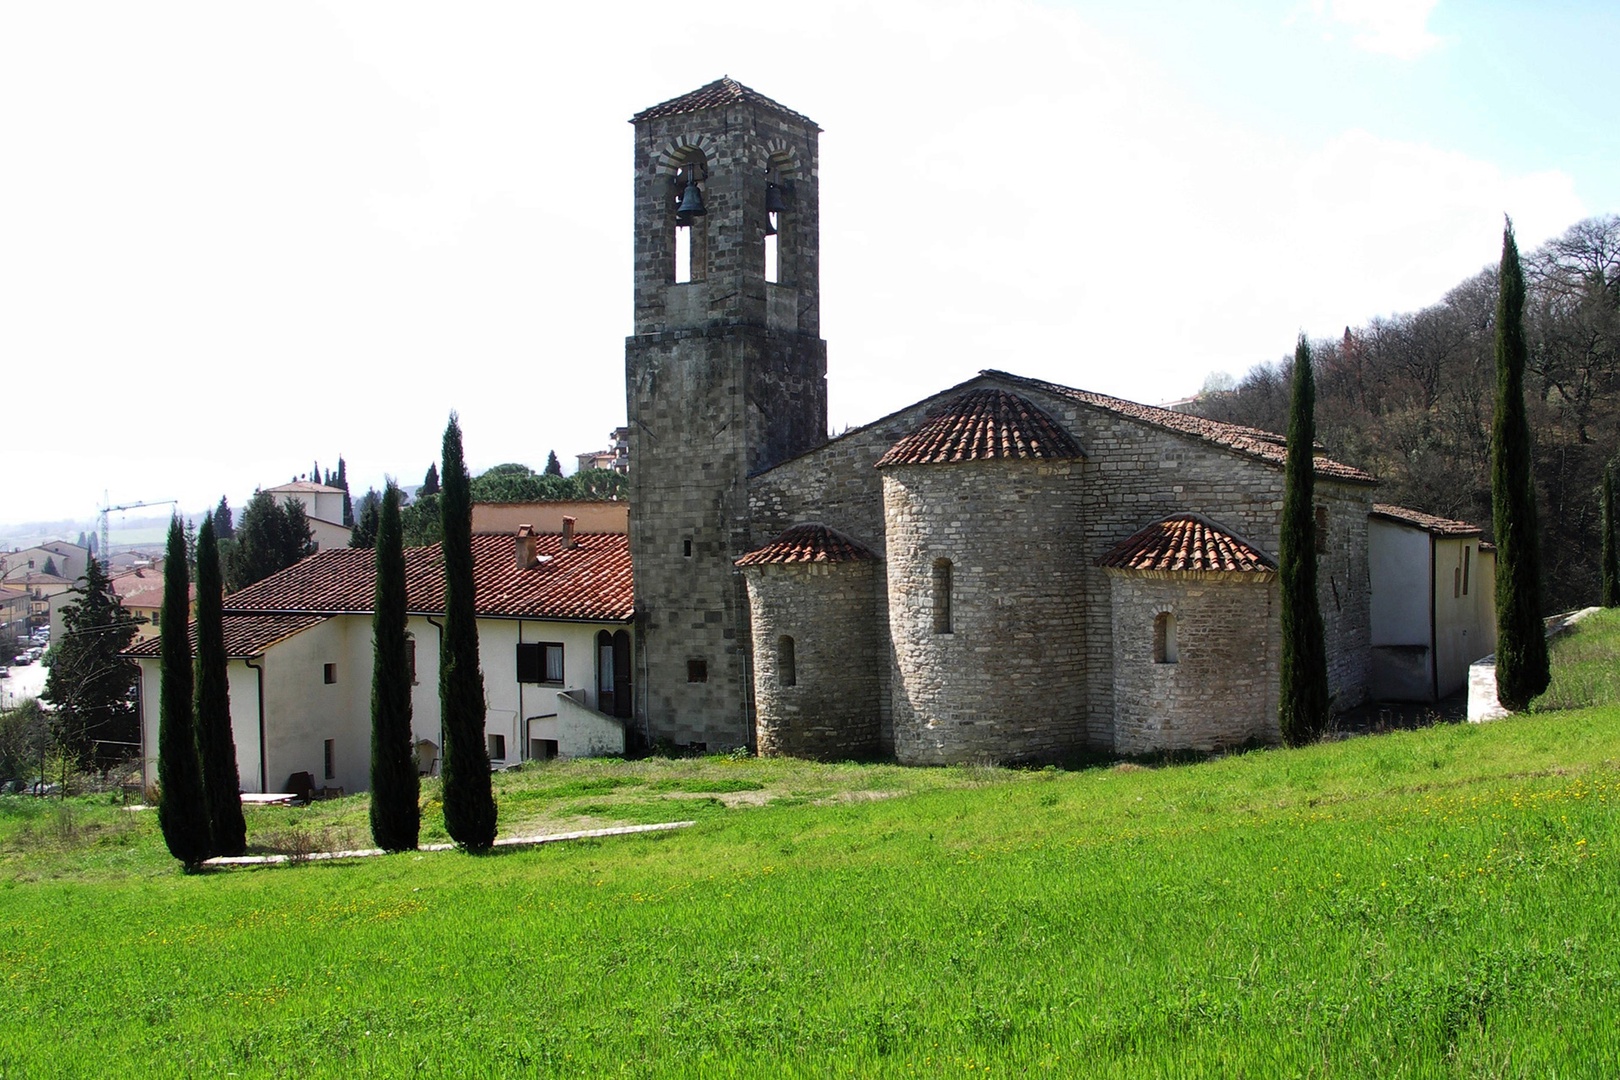 The ancient church of San Leolino in Rignano sull'Arno dates back to 1066.